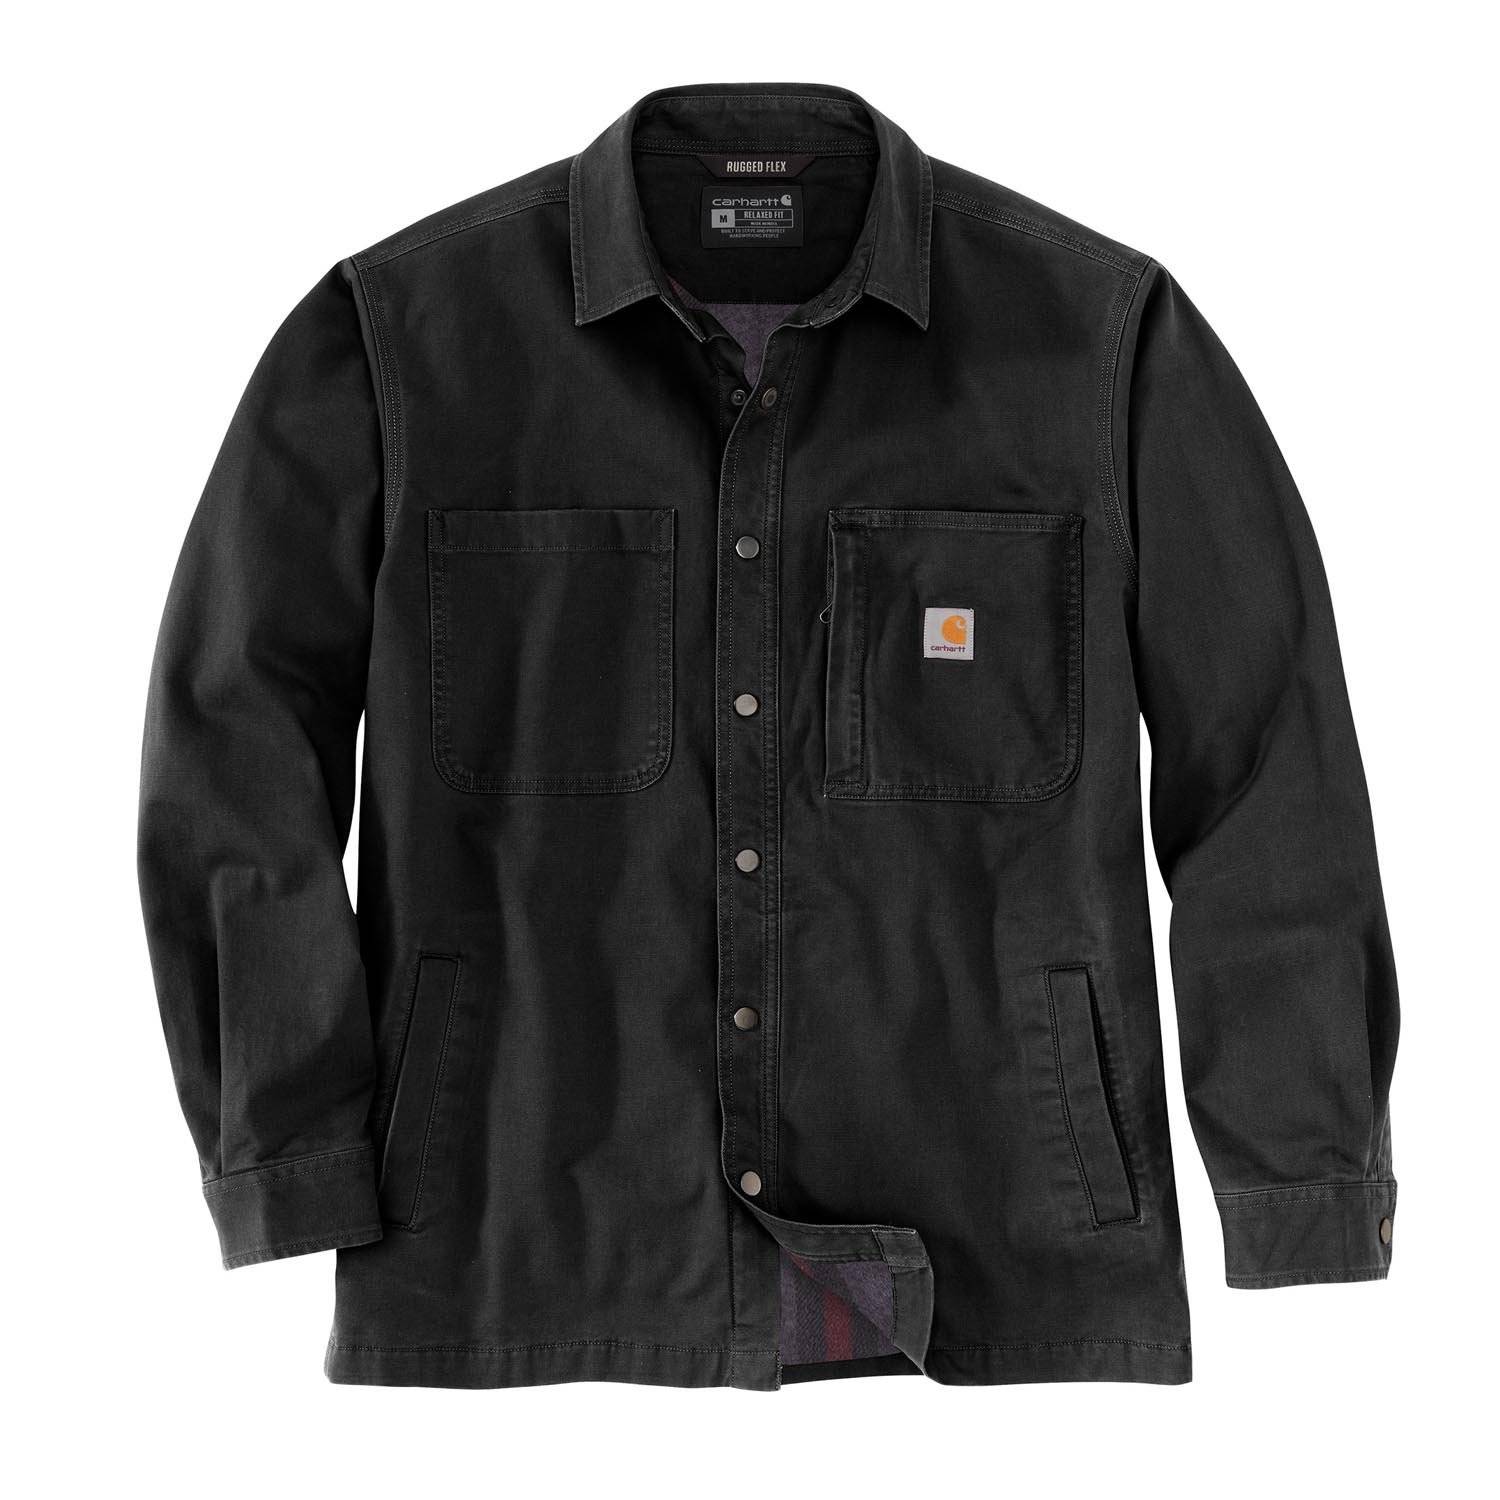 Carhartt Rugged Flex Peak Men's Bonded Fleece Jacket - Black